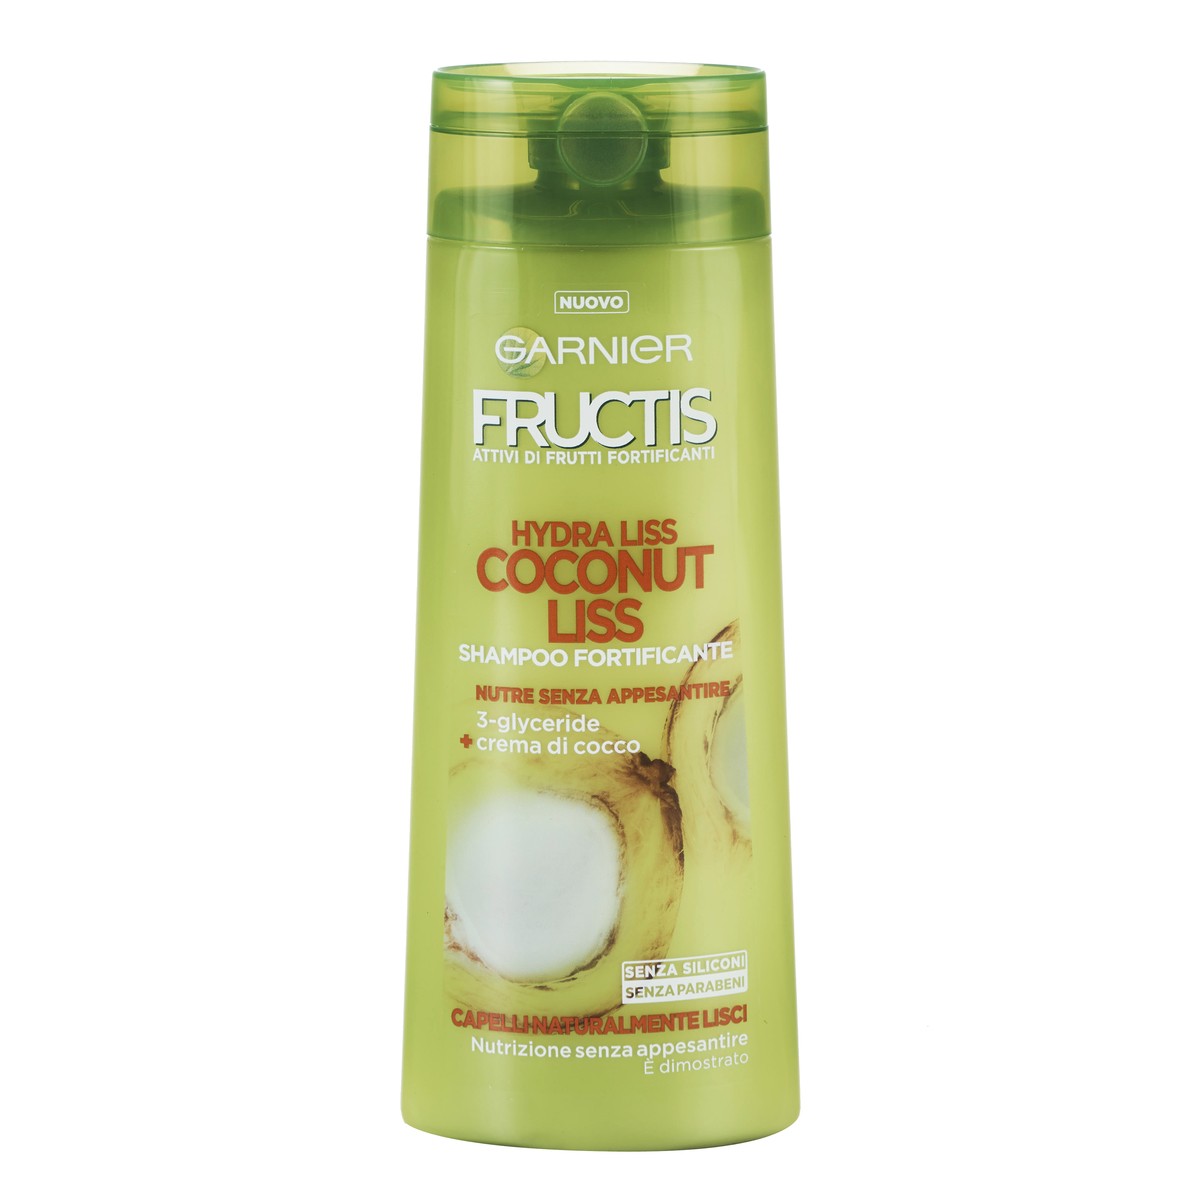 Garnier Fructis Shampoo fortificante Coconut Liss